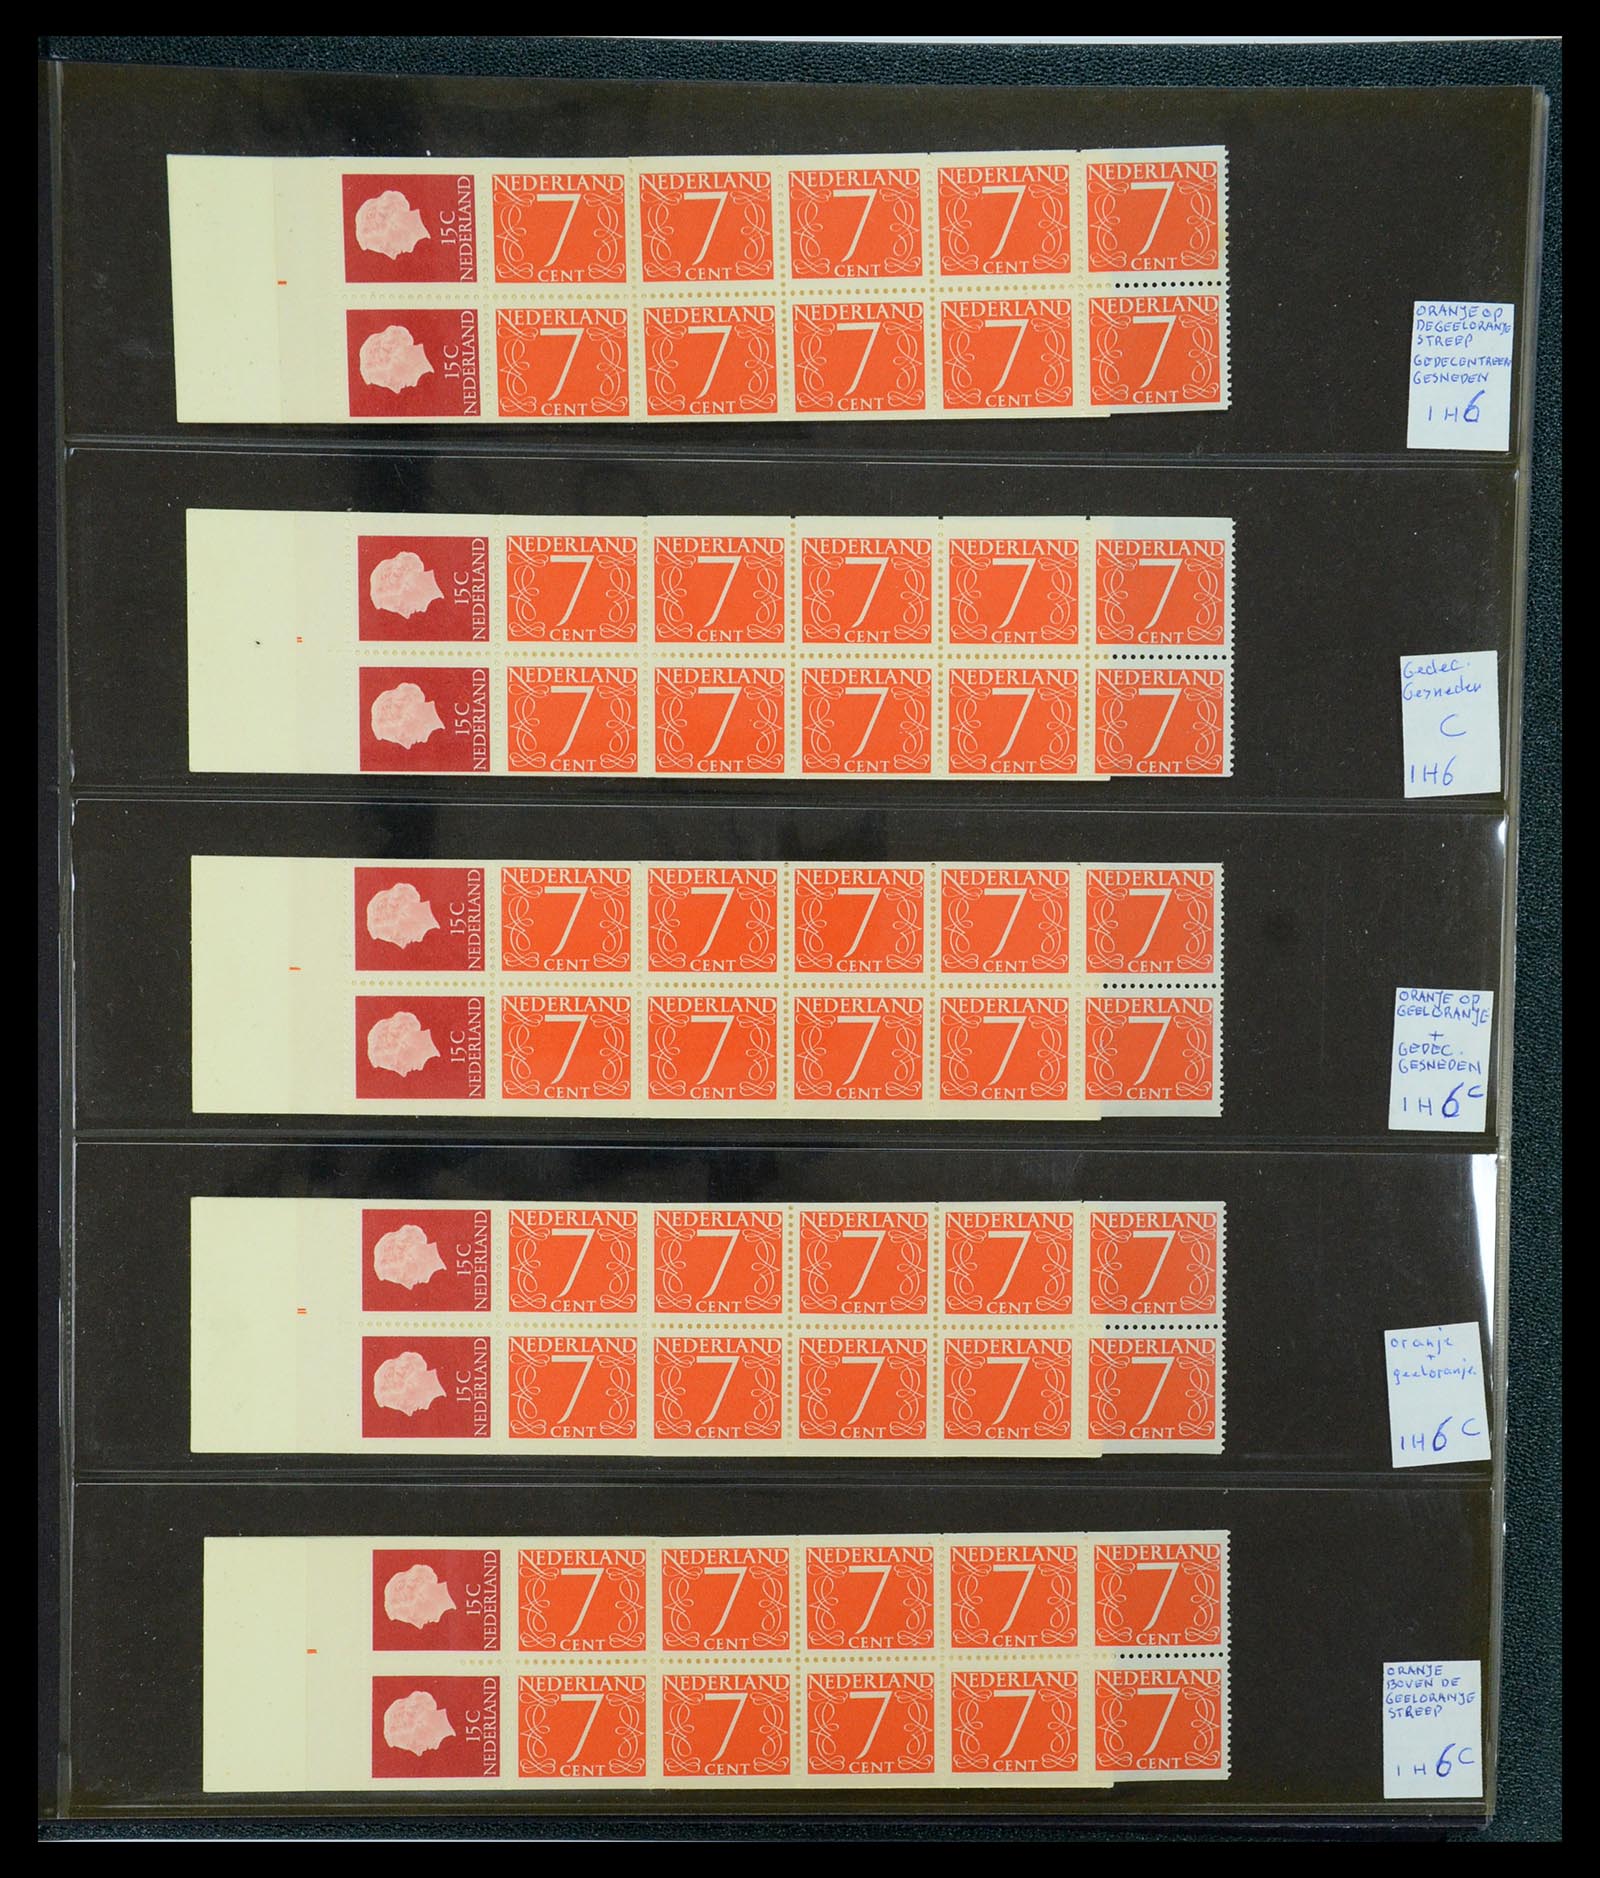 35705 006 - Stamp Collection 35705 Netherlands stamp booklets 1964-2000.